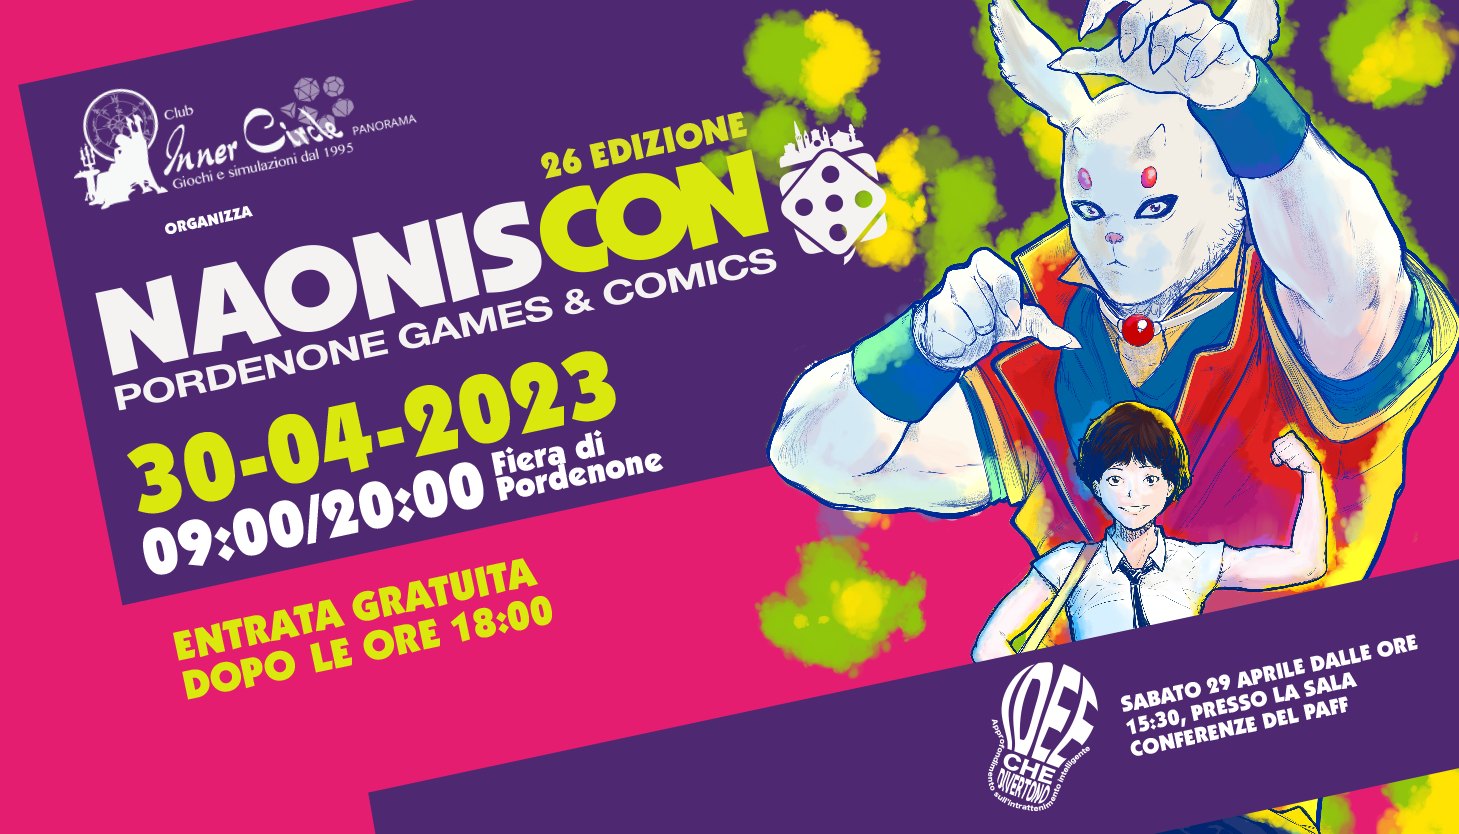 NaonisCon 2023 – Pordenone Games & Comics